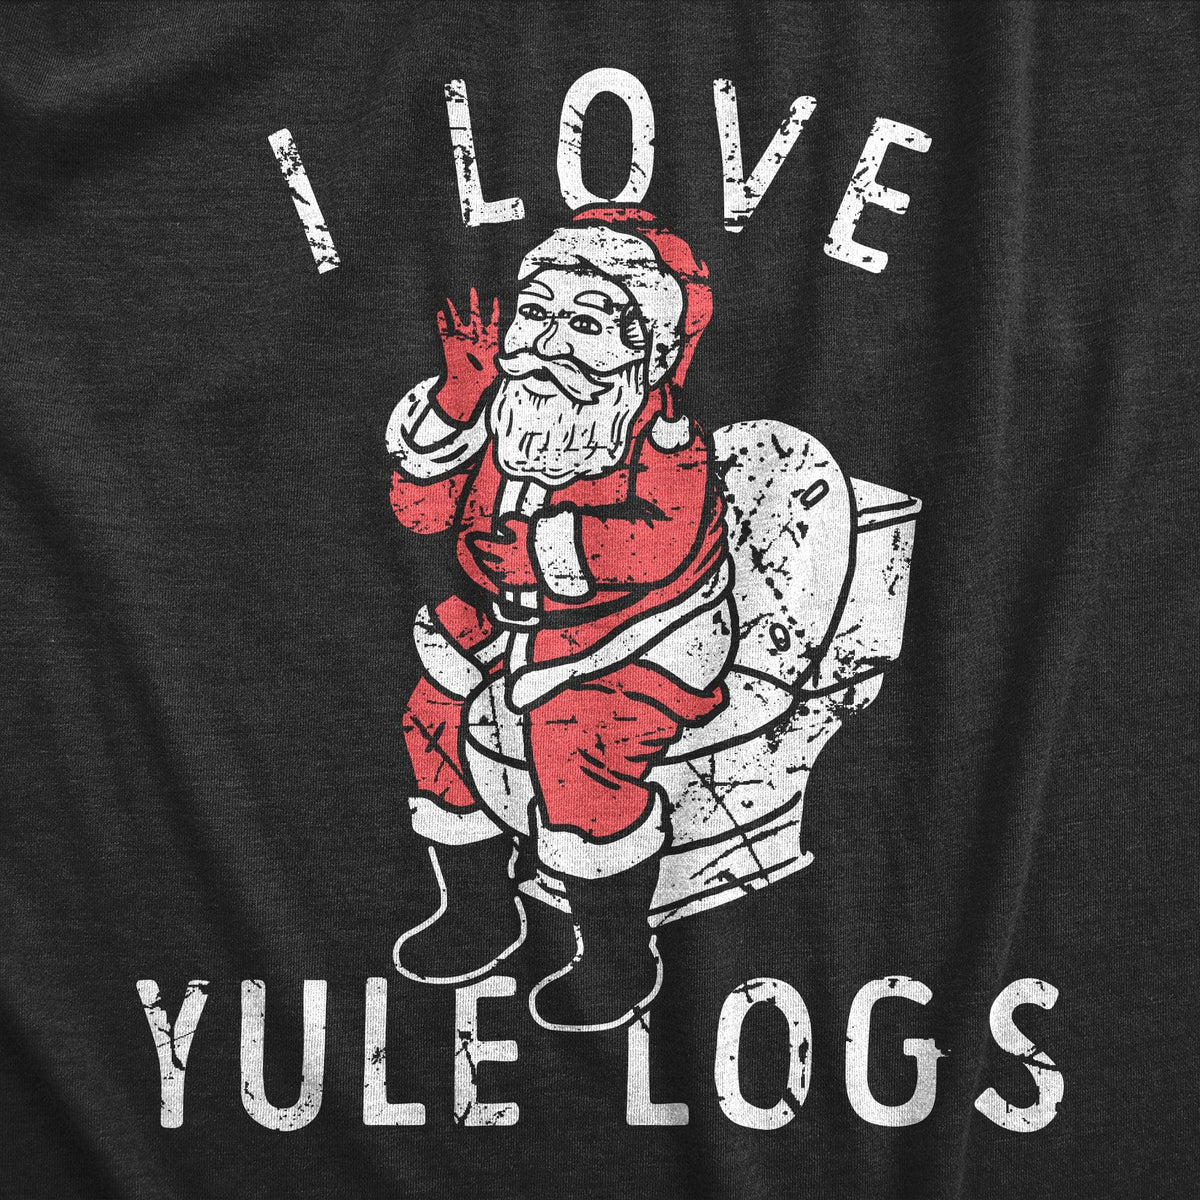 I Love Yule Logs Women&#39;s Tshirt  -  Crazy Dog T-Shirts